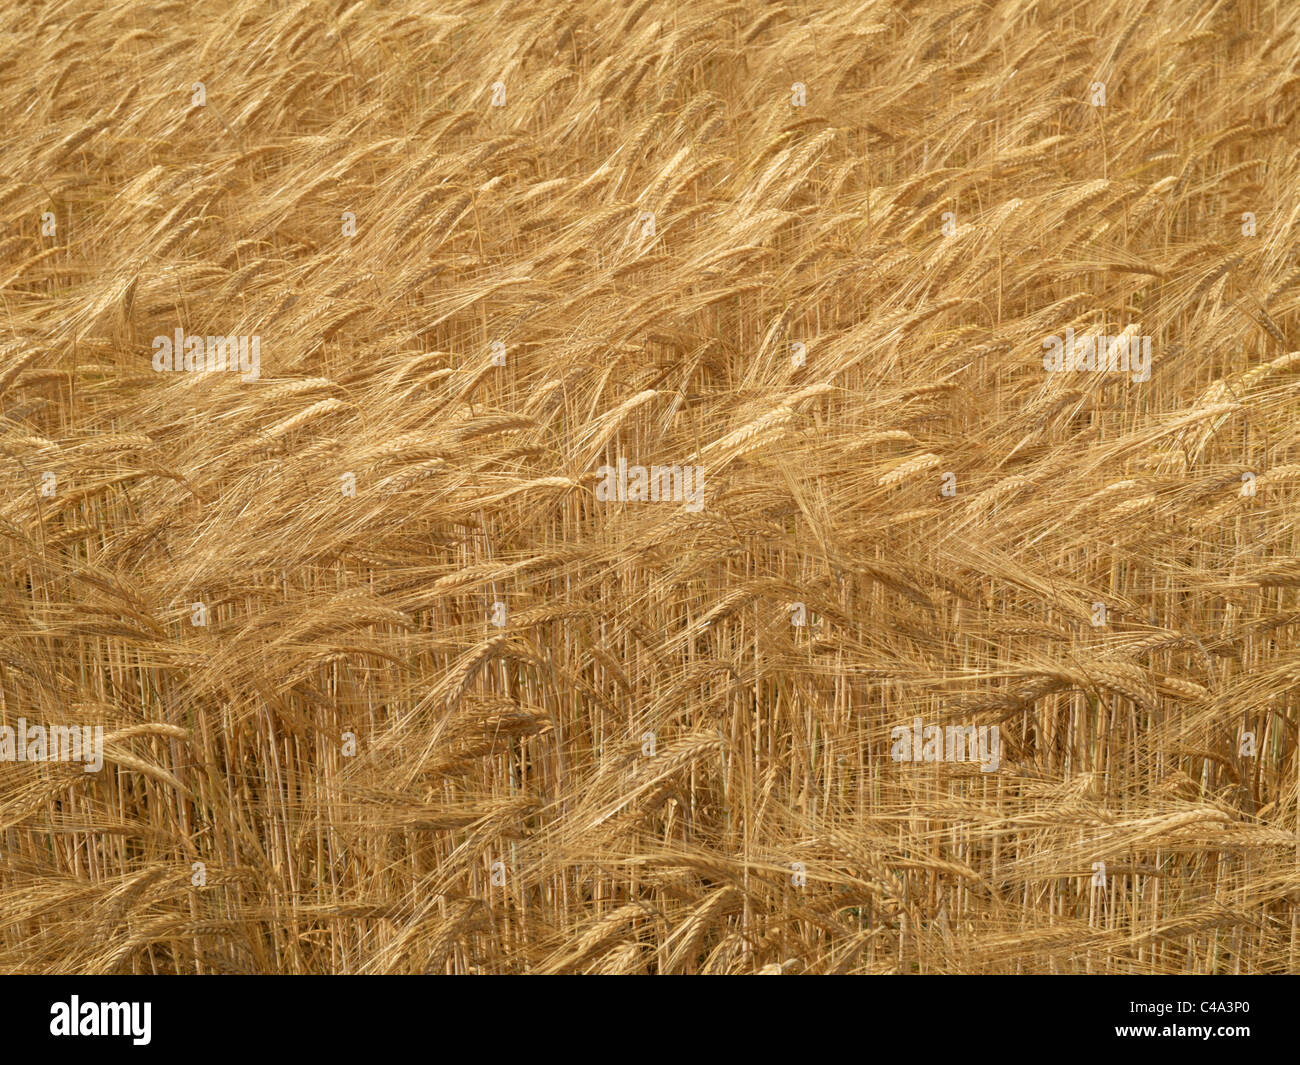 Field of ripe wheat (Triticum sp.) Stock Photo